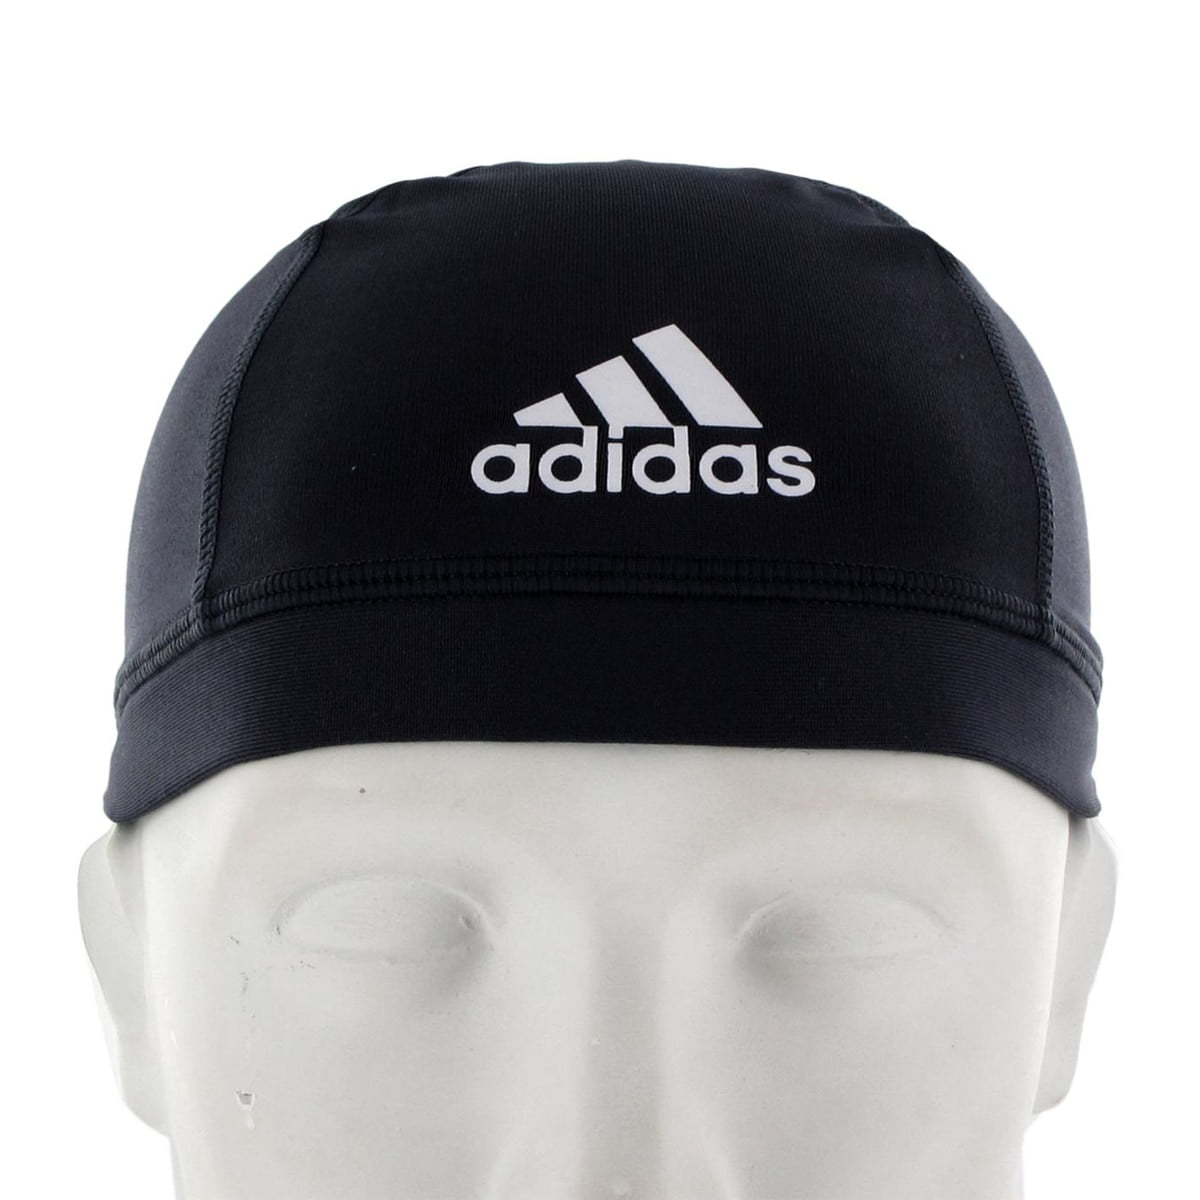 adidas money football headband